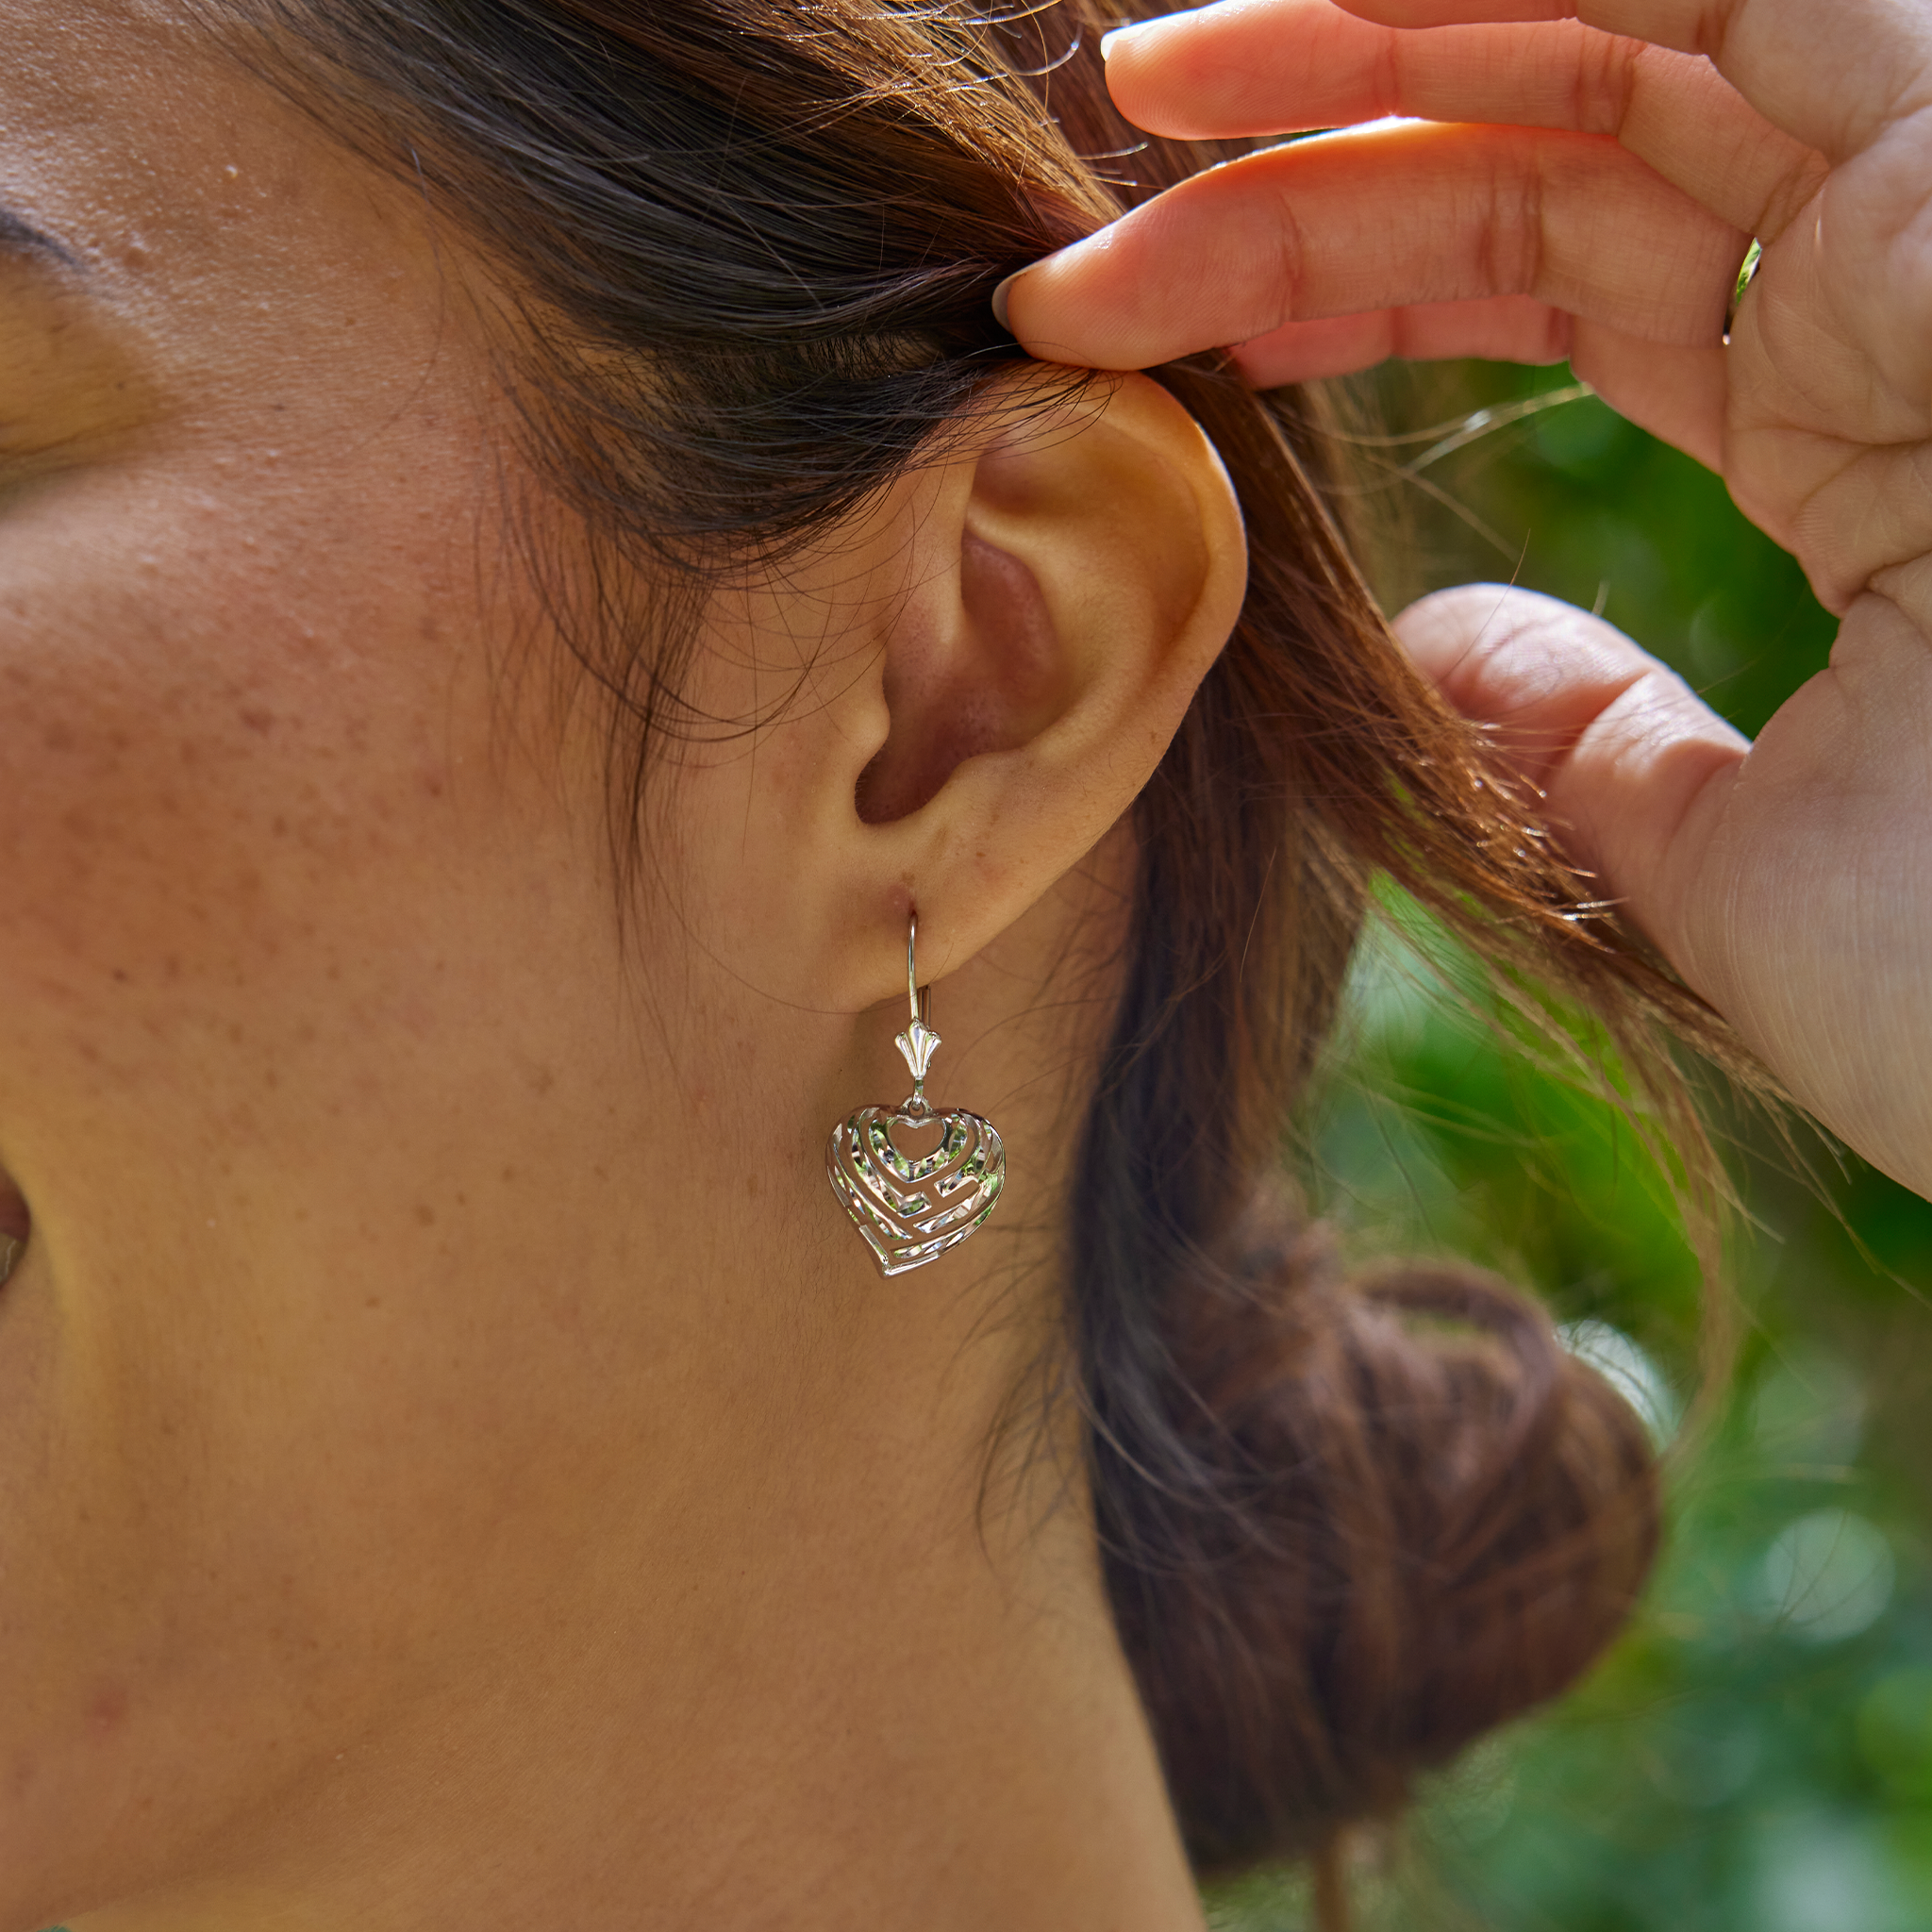 Aloha Heart Earrings in White Gold - 15mm